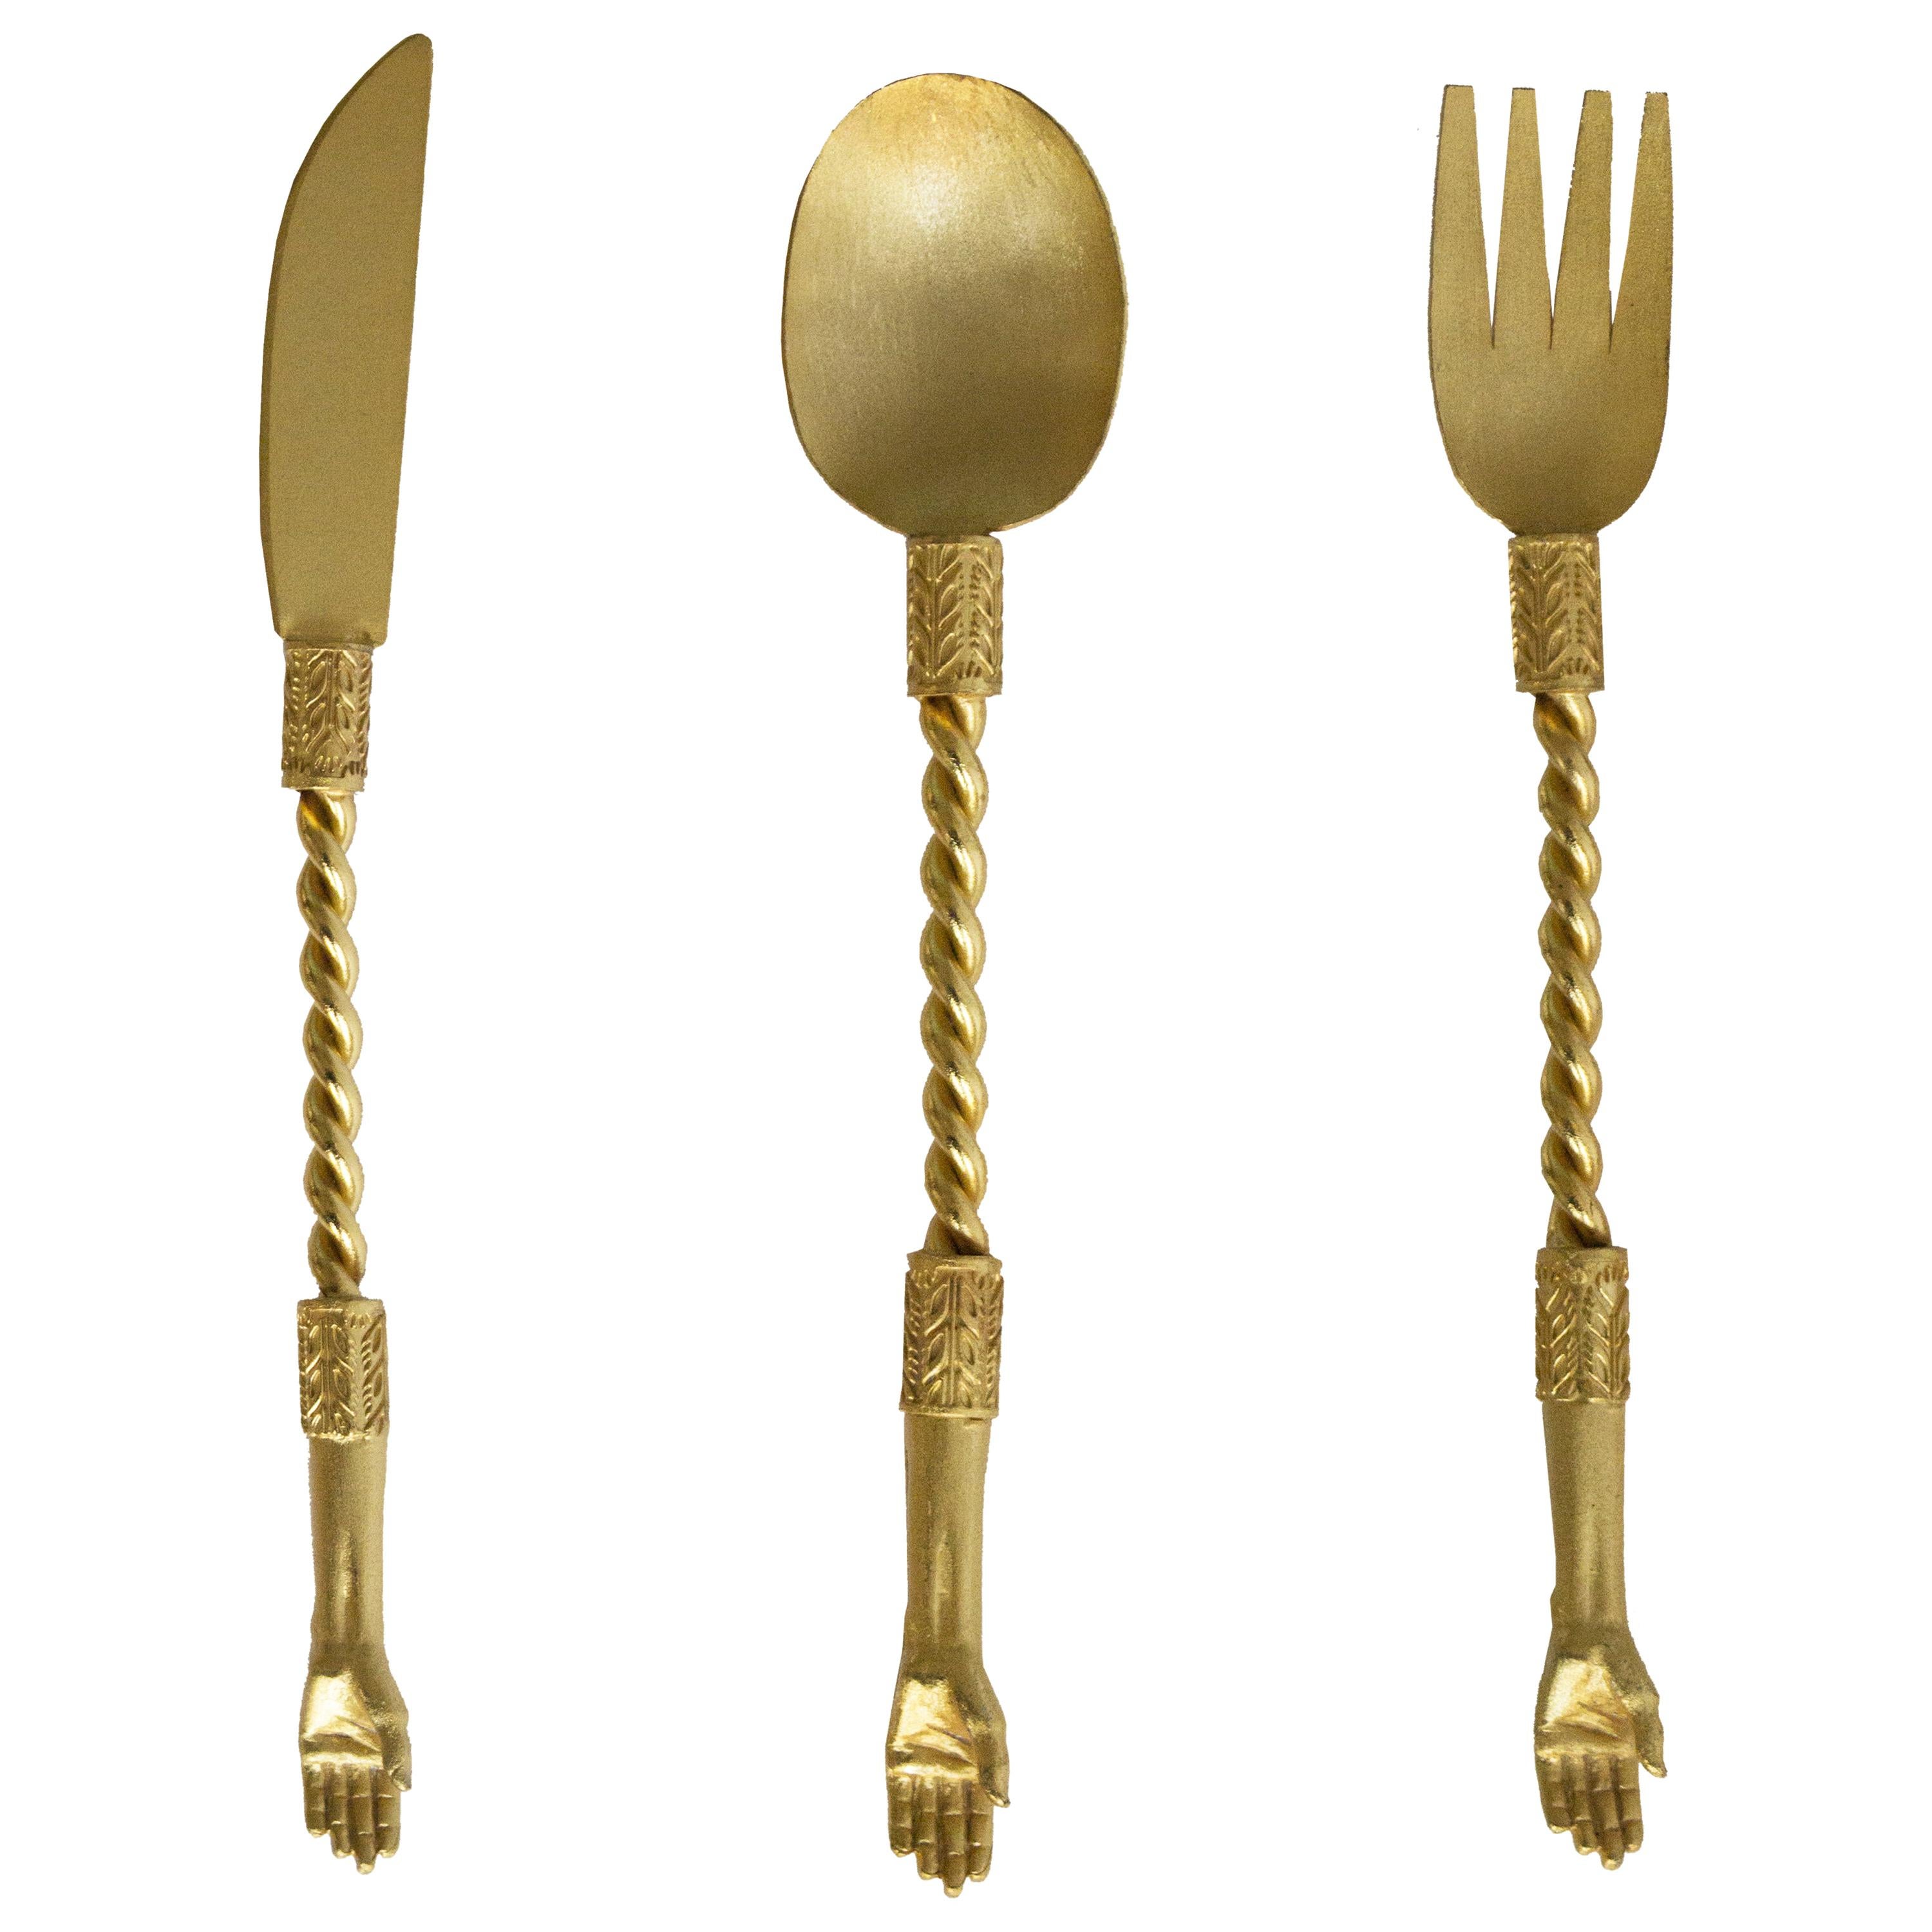 Contemporary Hand Cutlery Servers Golden Plated Handcrafted Italy Natalia Criado